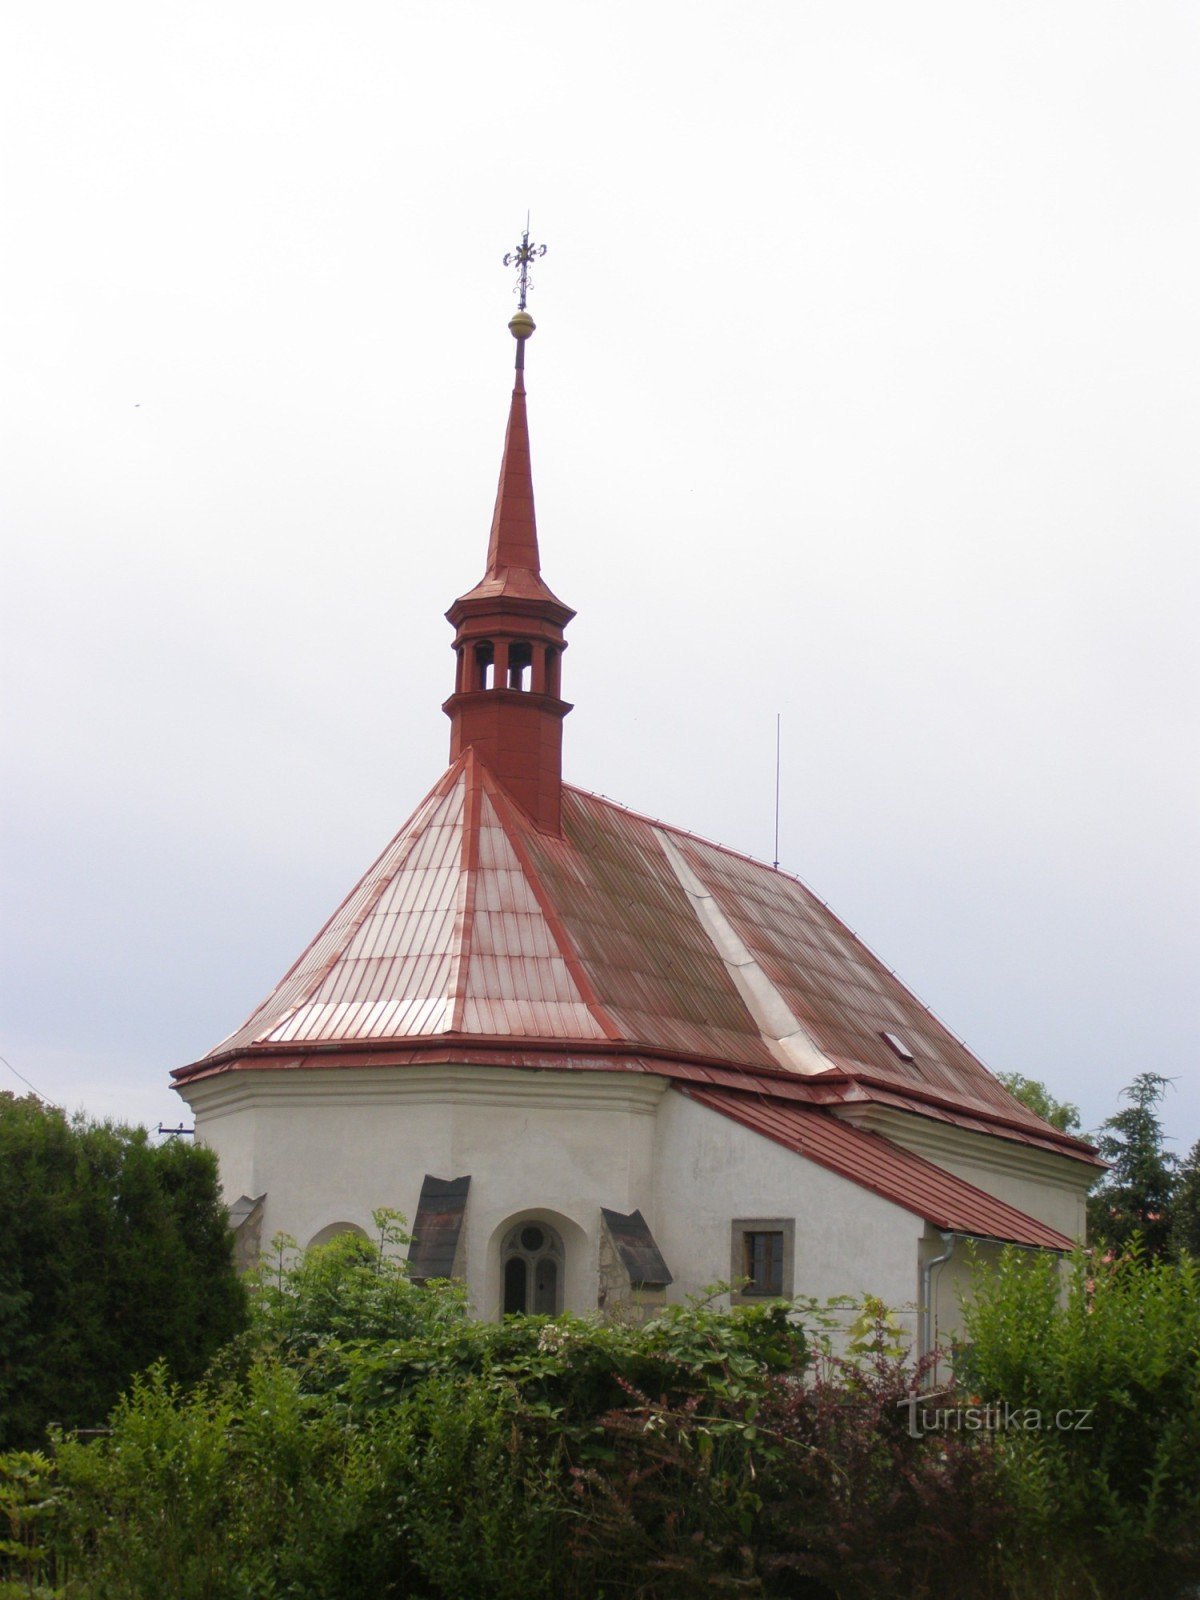 Mladějov - die Kirche St. Giljí mit dem Glockenturm